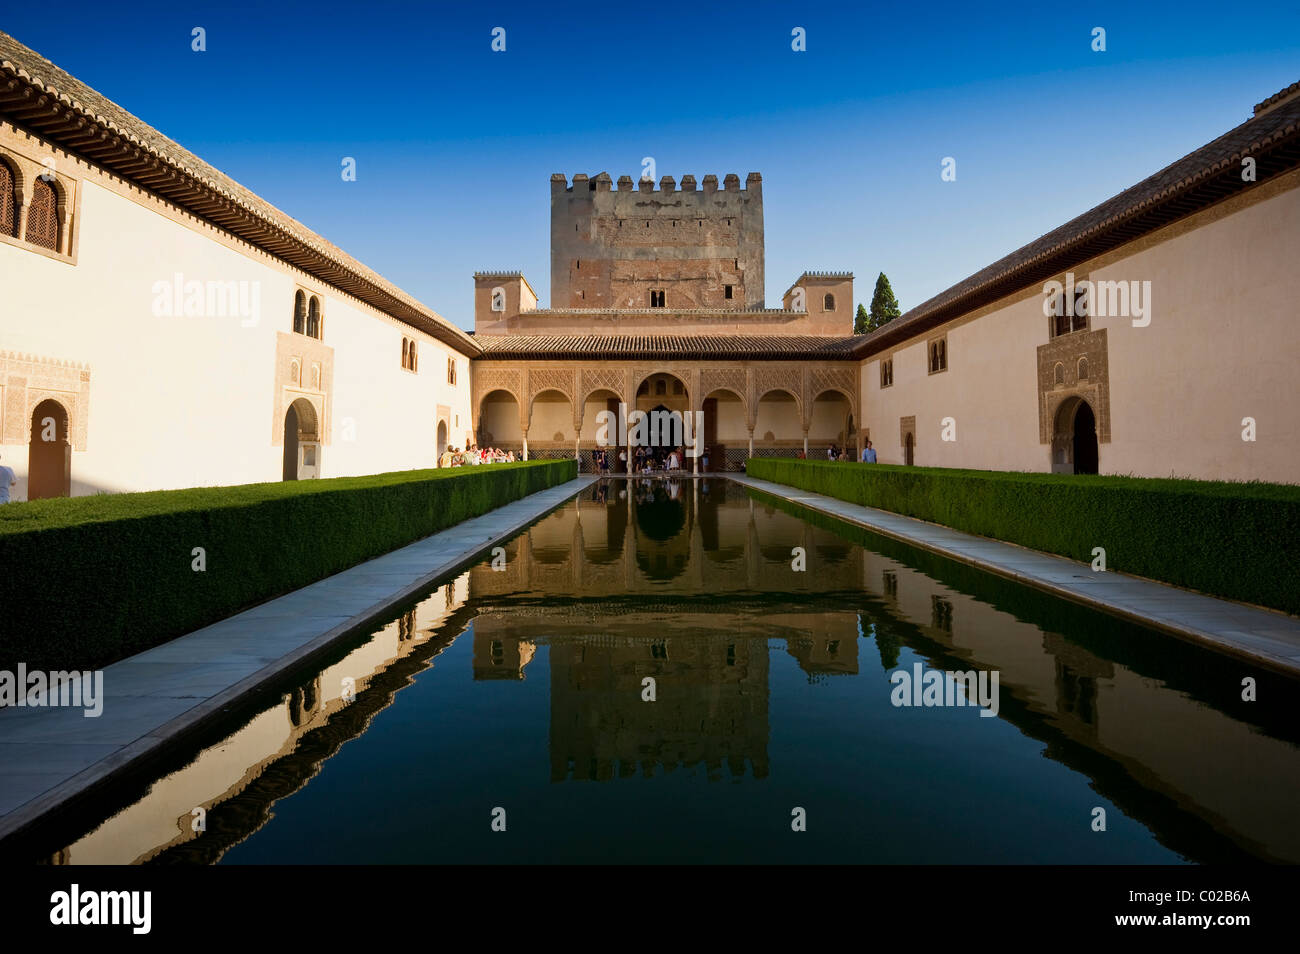 Patio de Los Mapuches, Alhambra, Granada, Andalusien, Spanien, Europa Stockfoto